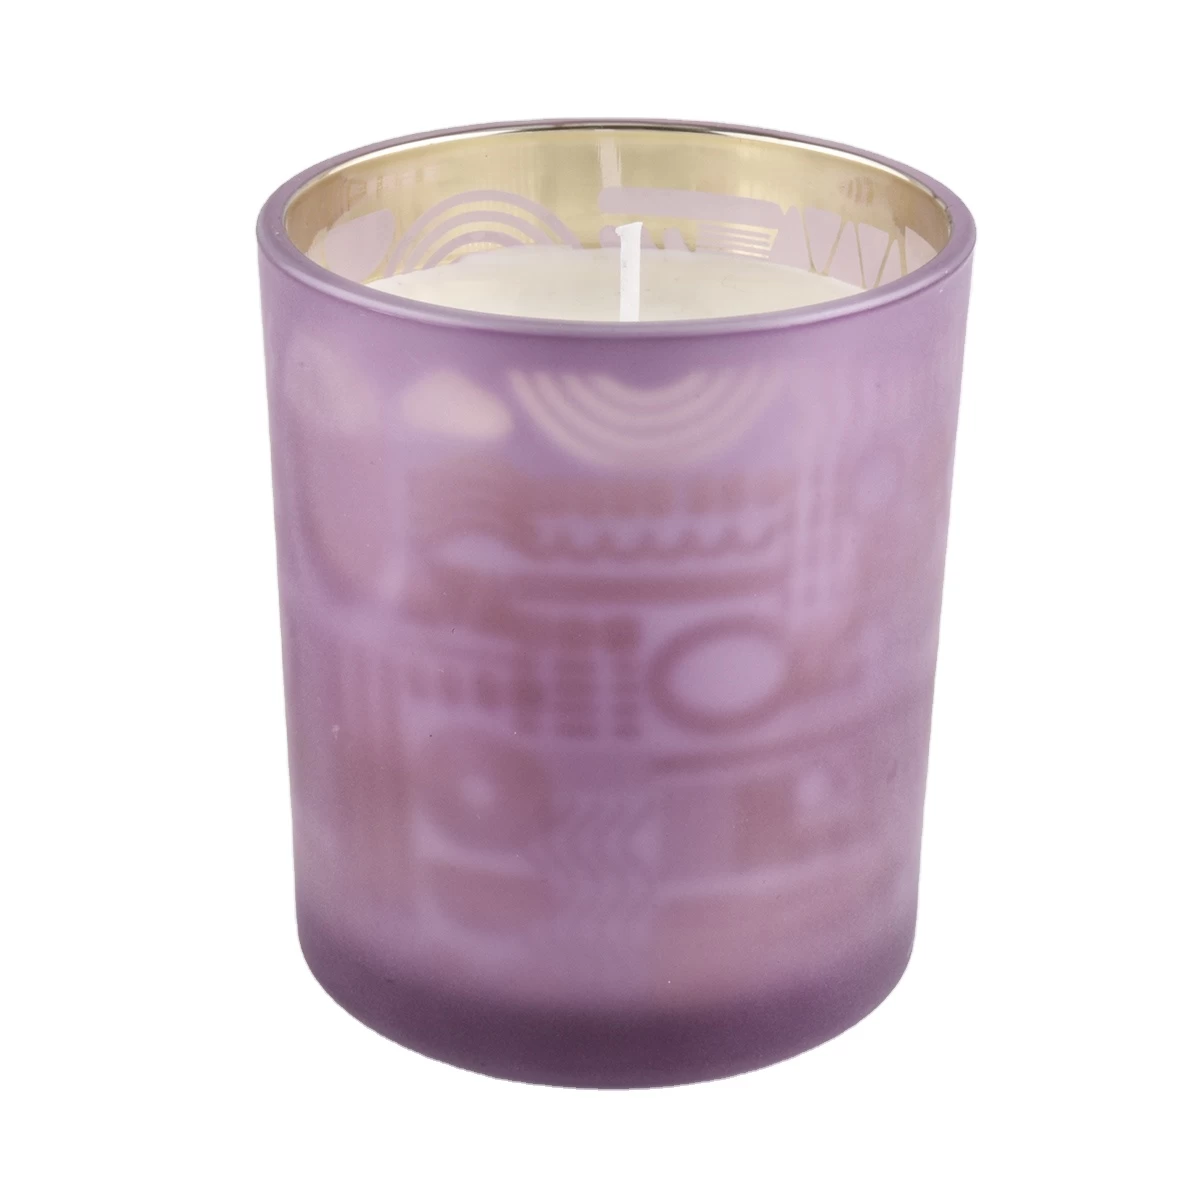 8 oz 12 oz empty purple matte glass candle holder home wedding decoration